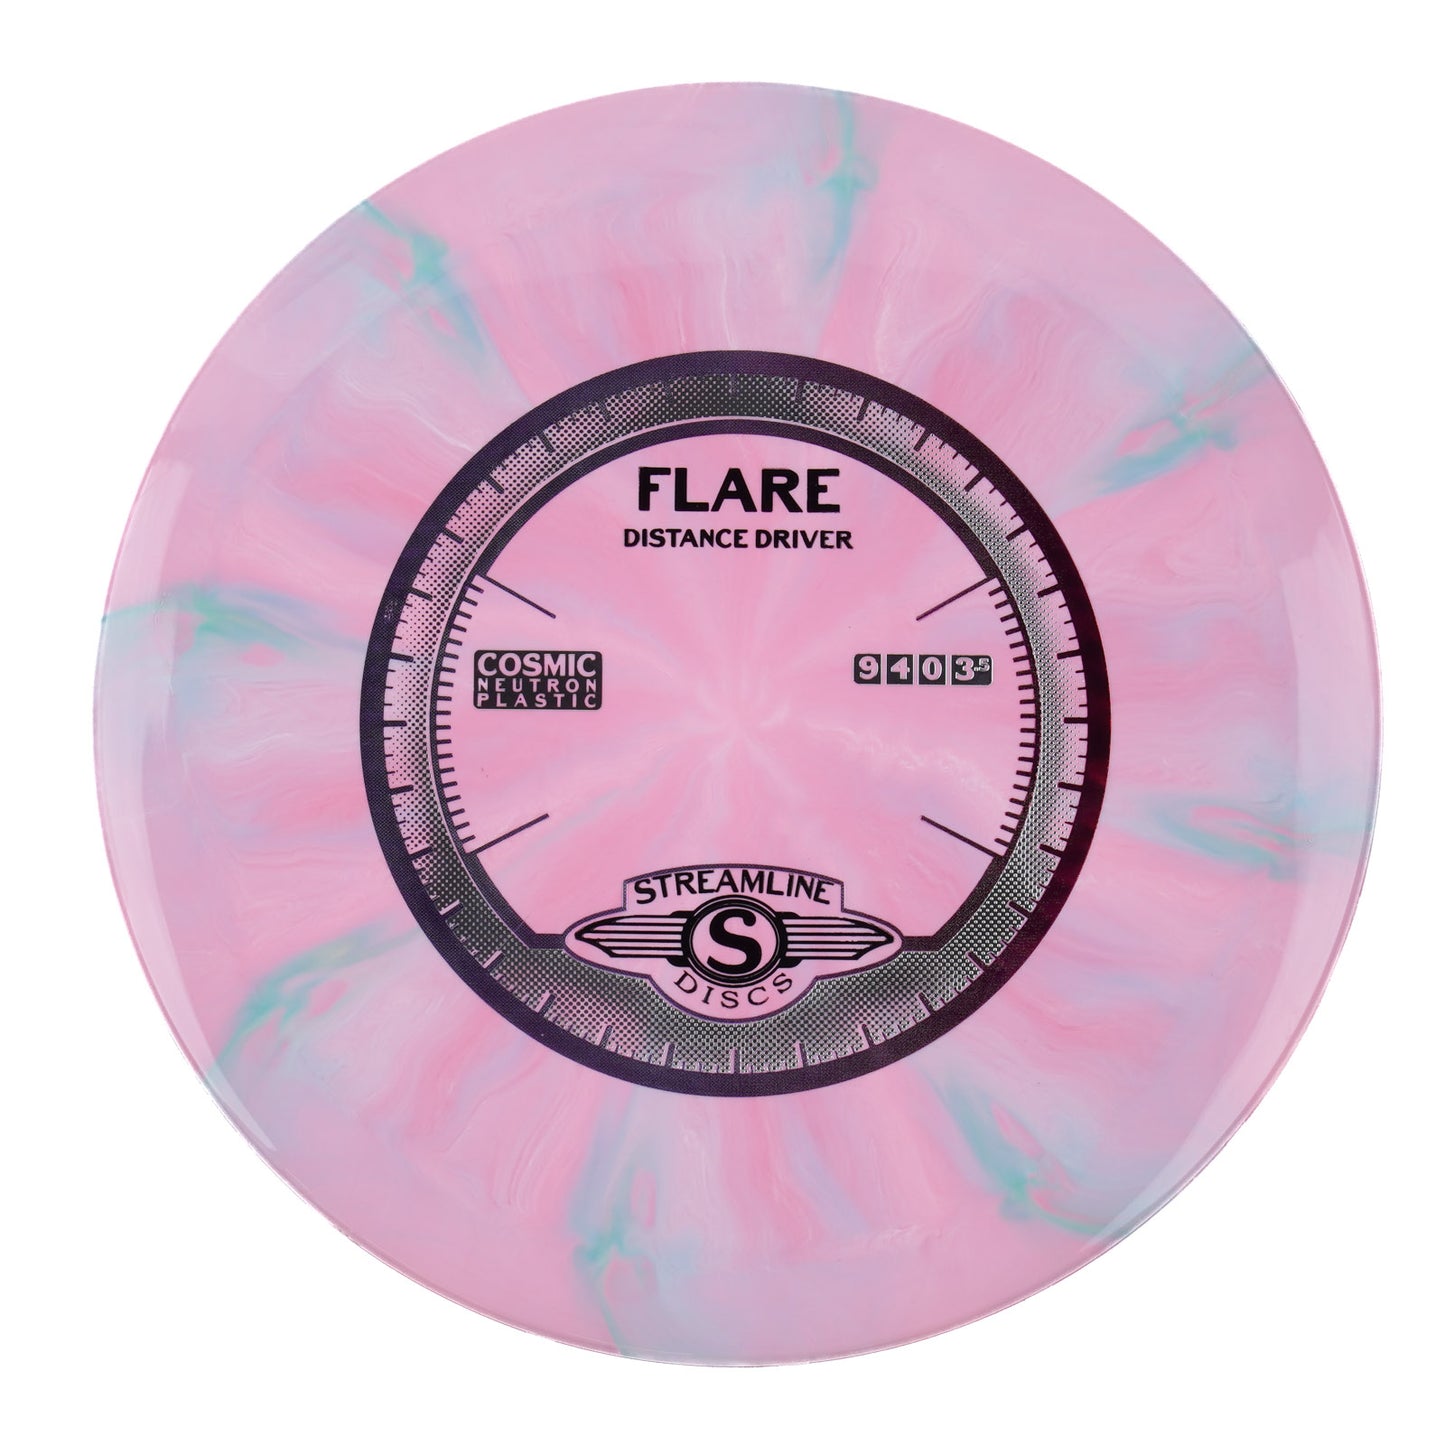 Streamline Flare - Cosmic Neutron 175g | Style 0003